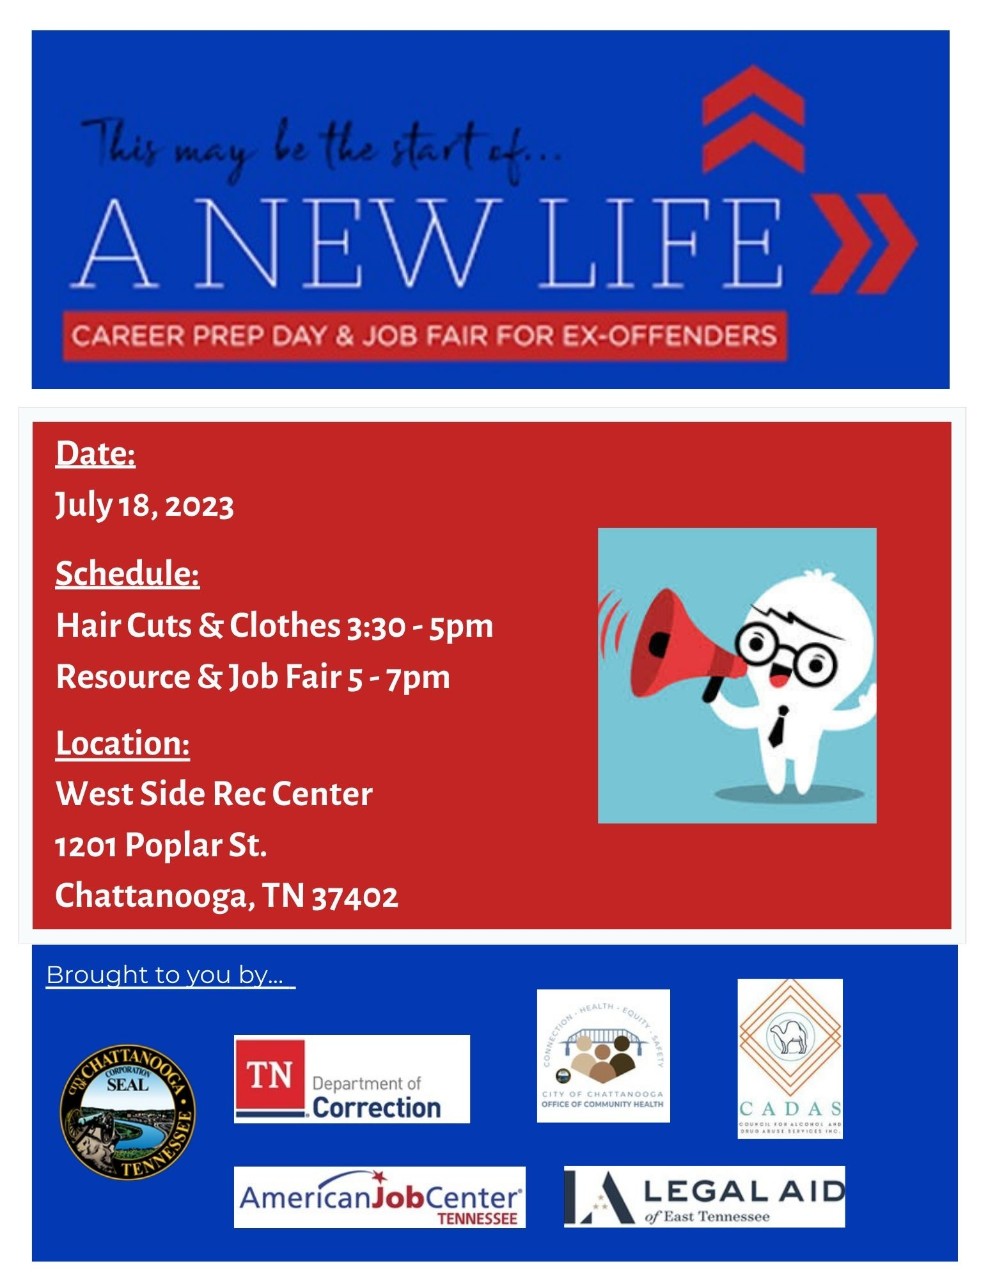 Career Prep Day & Job Fair in Chattanooga 7/18/2023